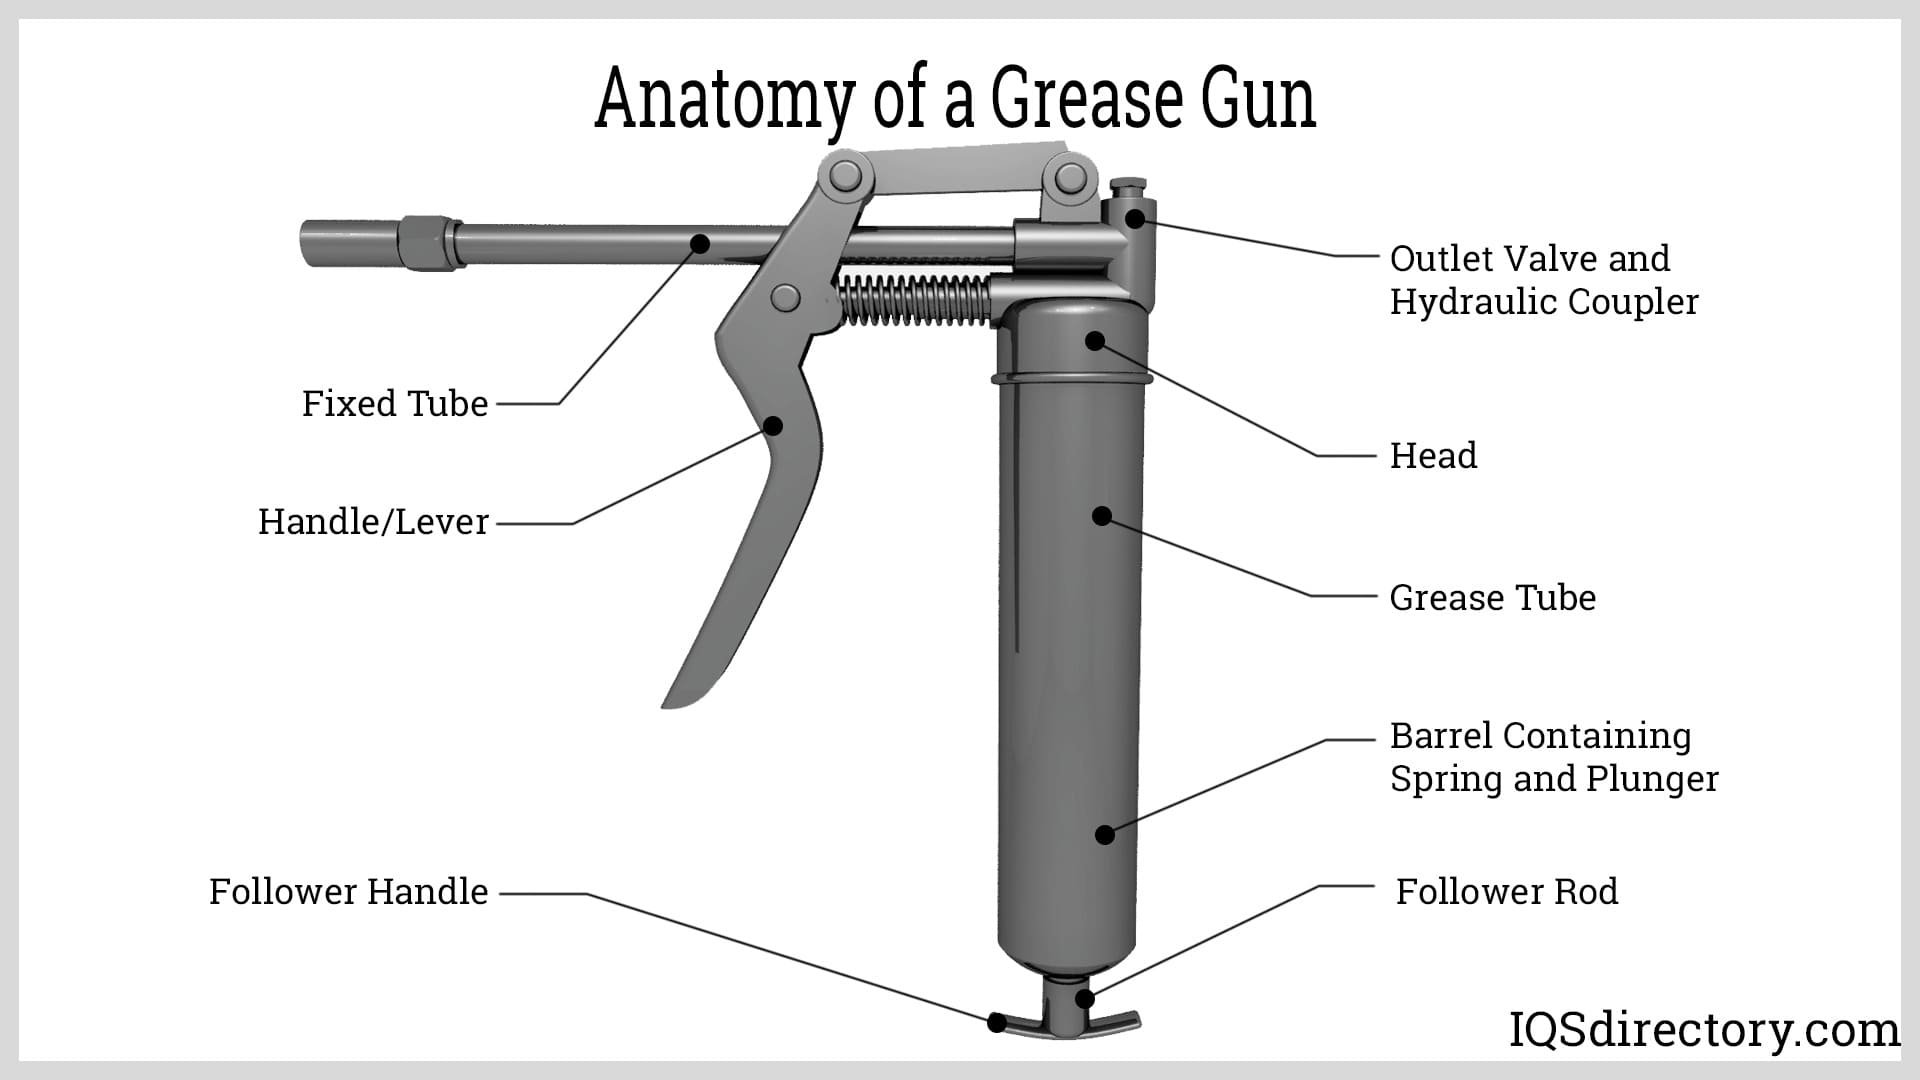 Anatomy of a Grease Gun